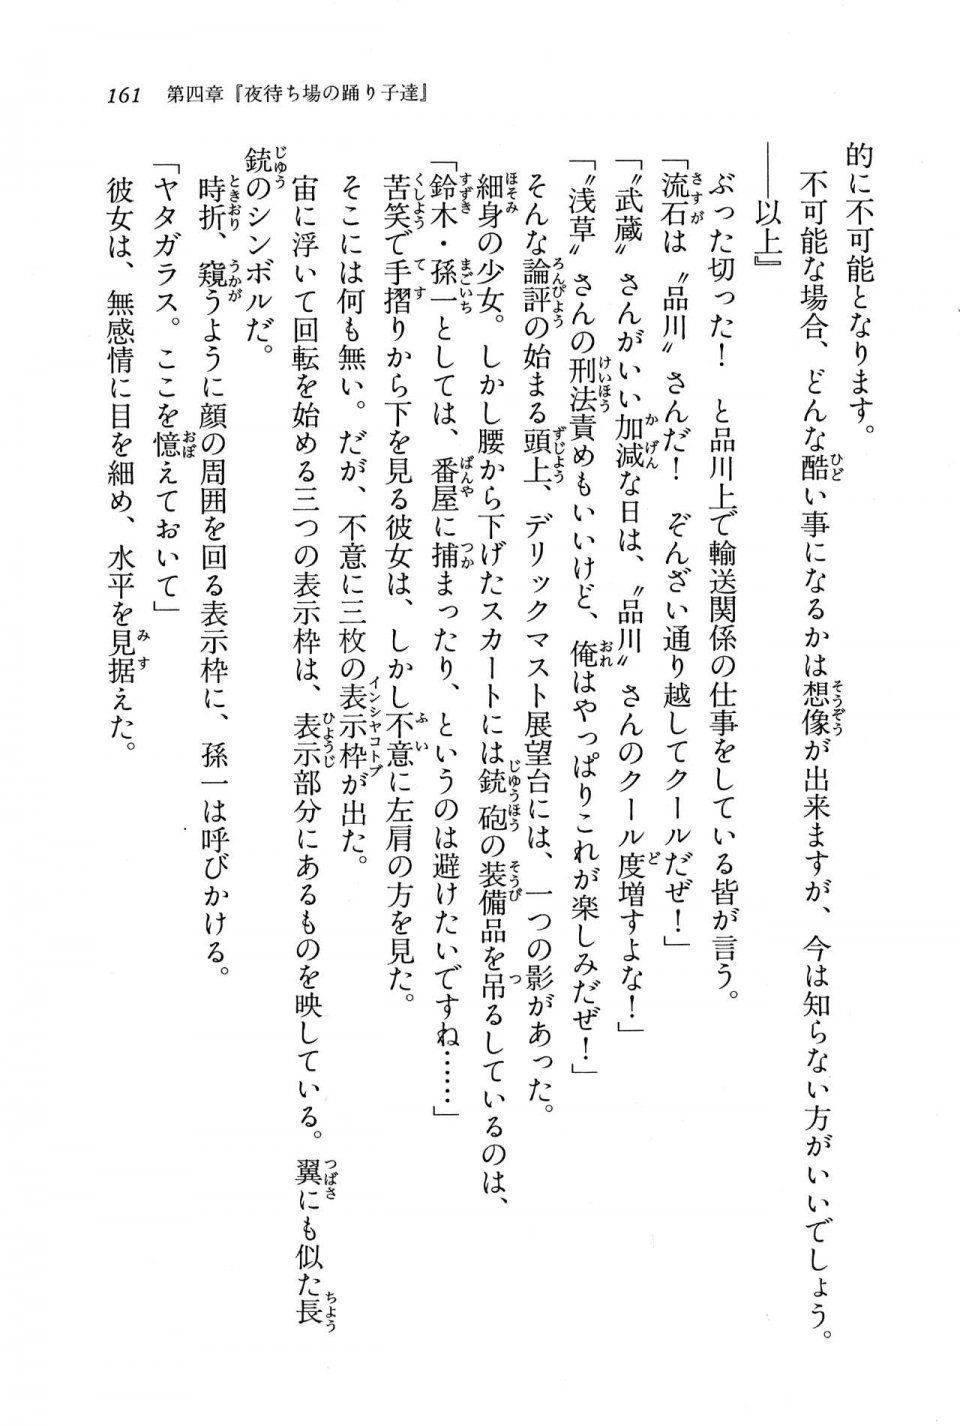 Kyoukai Senjou no Horizon BD Special Mininovel Vol 7(4A) - Photo #165